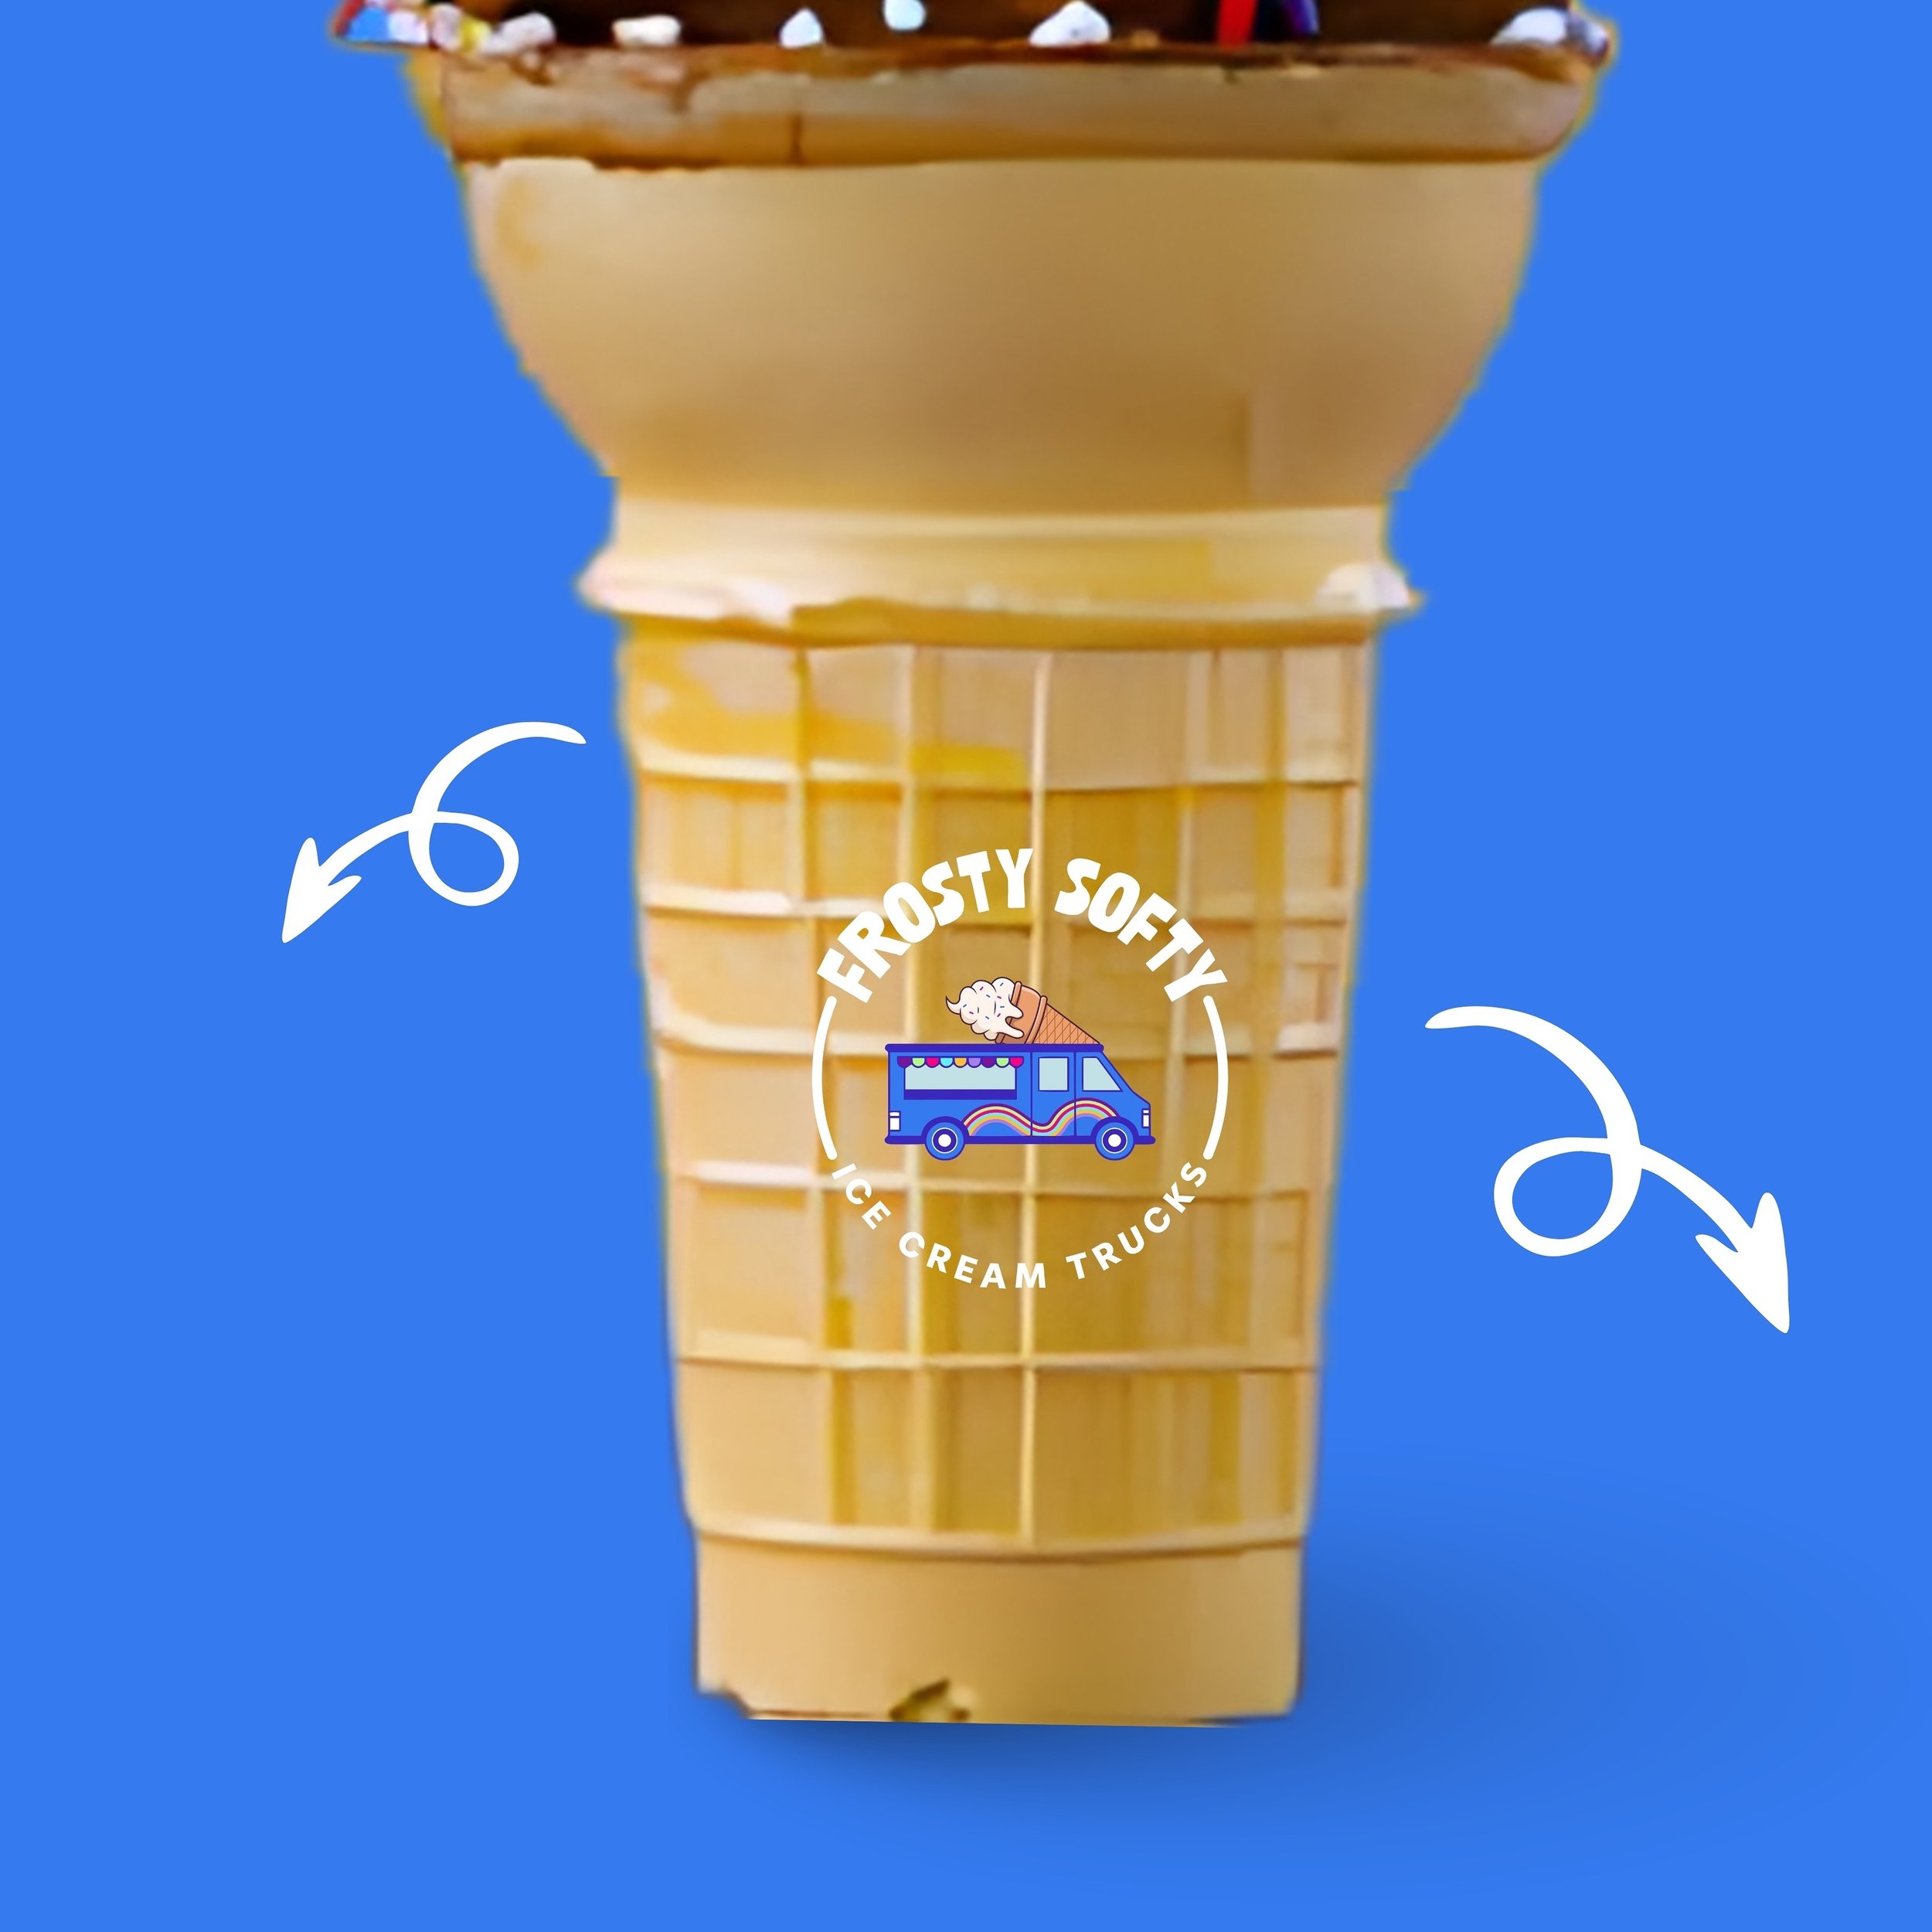 Savor our delicious Dipped in a cone! 🍦

#FrostySofty #DMVCatering #DMVEvents #Catering #DMVFoodie #DMVParties #IceCream #DMVWeddings #DMVCorporateEvents #DMVEventPlanning #SweetTreats #DMVPartyPlanner #DMVFoodTruck #Delicious #DMVCaterers #DMVCater